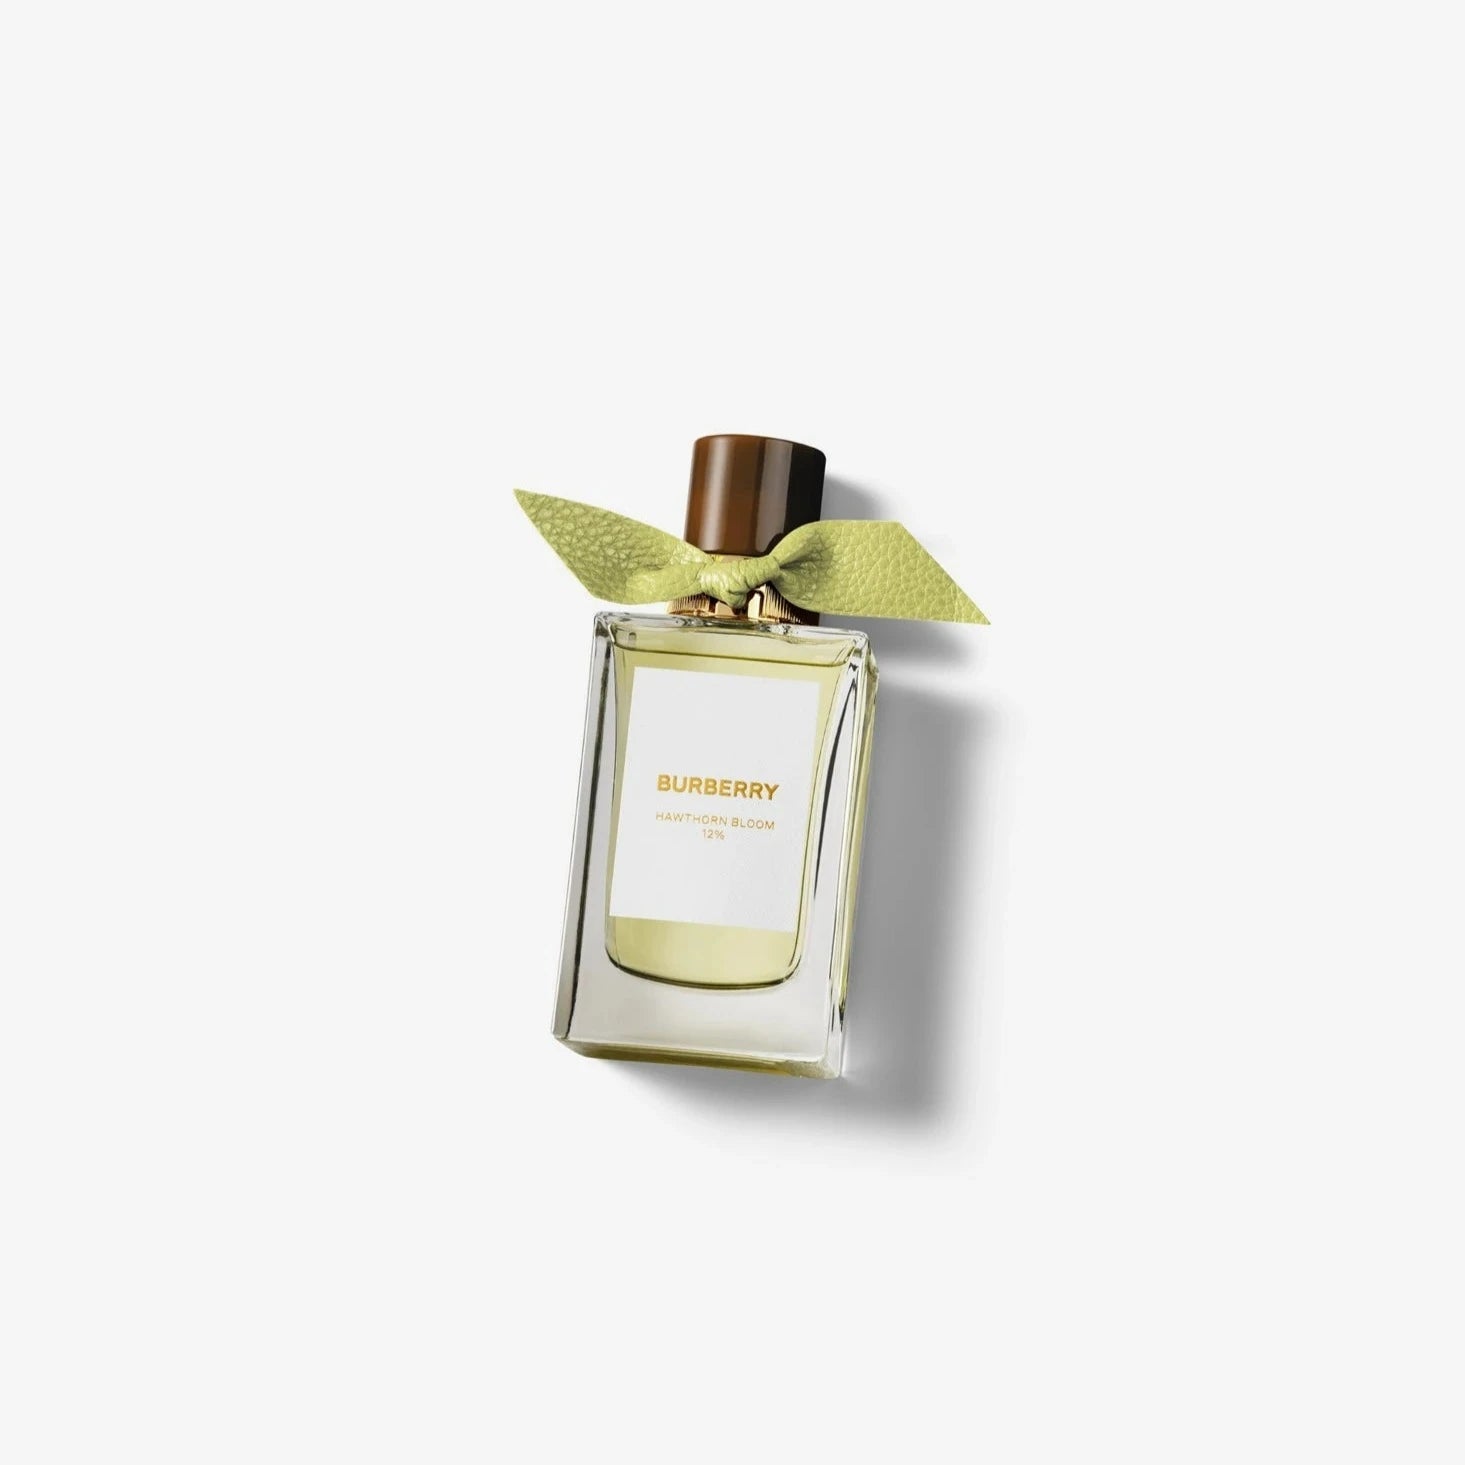 Burberry Bespoke Collection Hawthorn Bloom 12% EDP | My Perfume Shop Australia